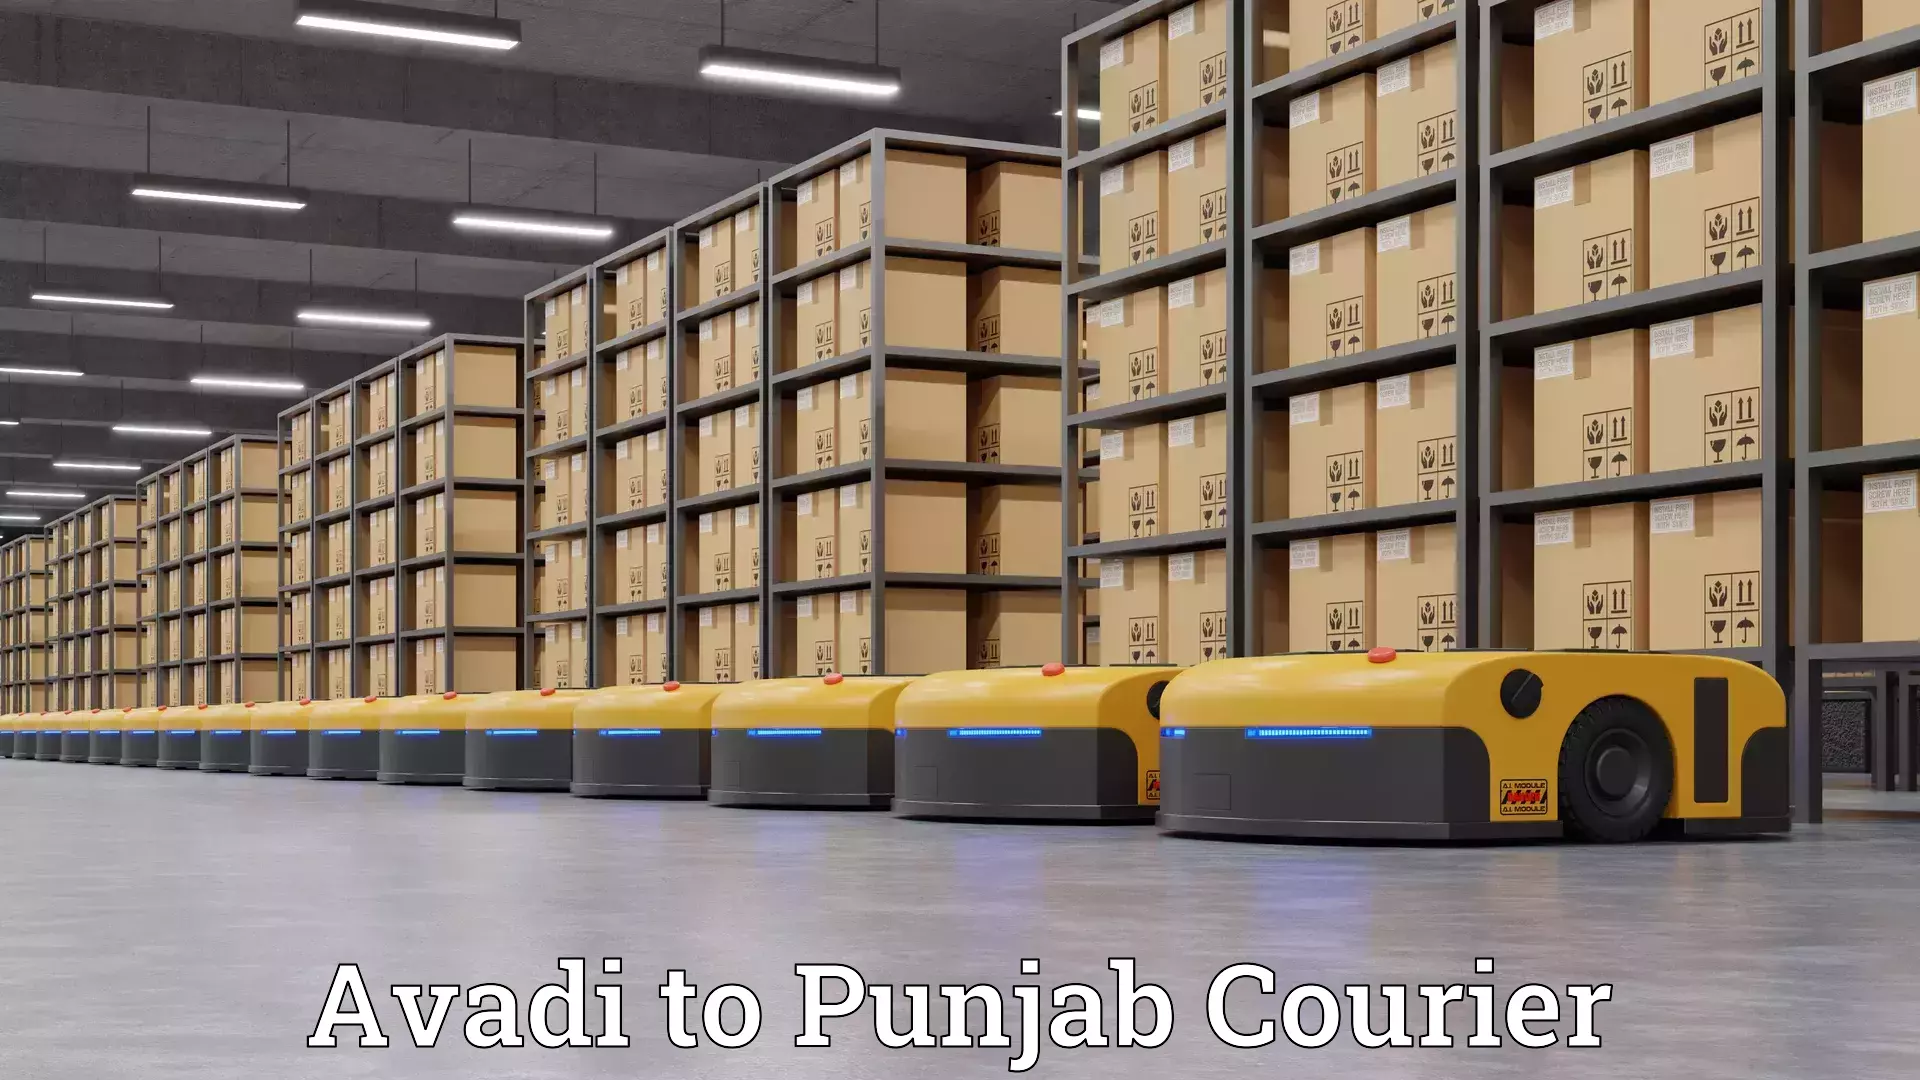 Professional packing services Avadi to Punjab